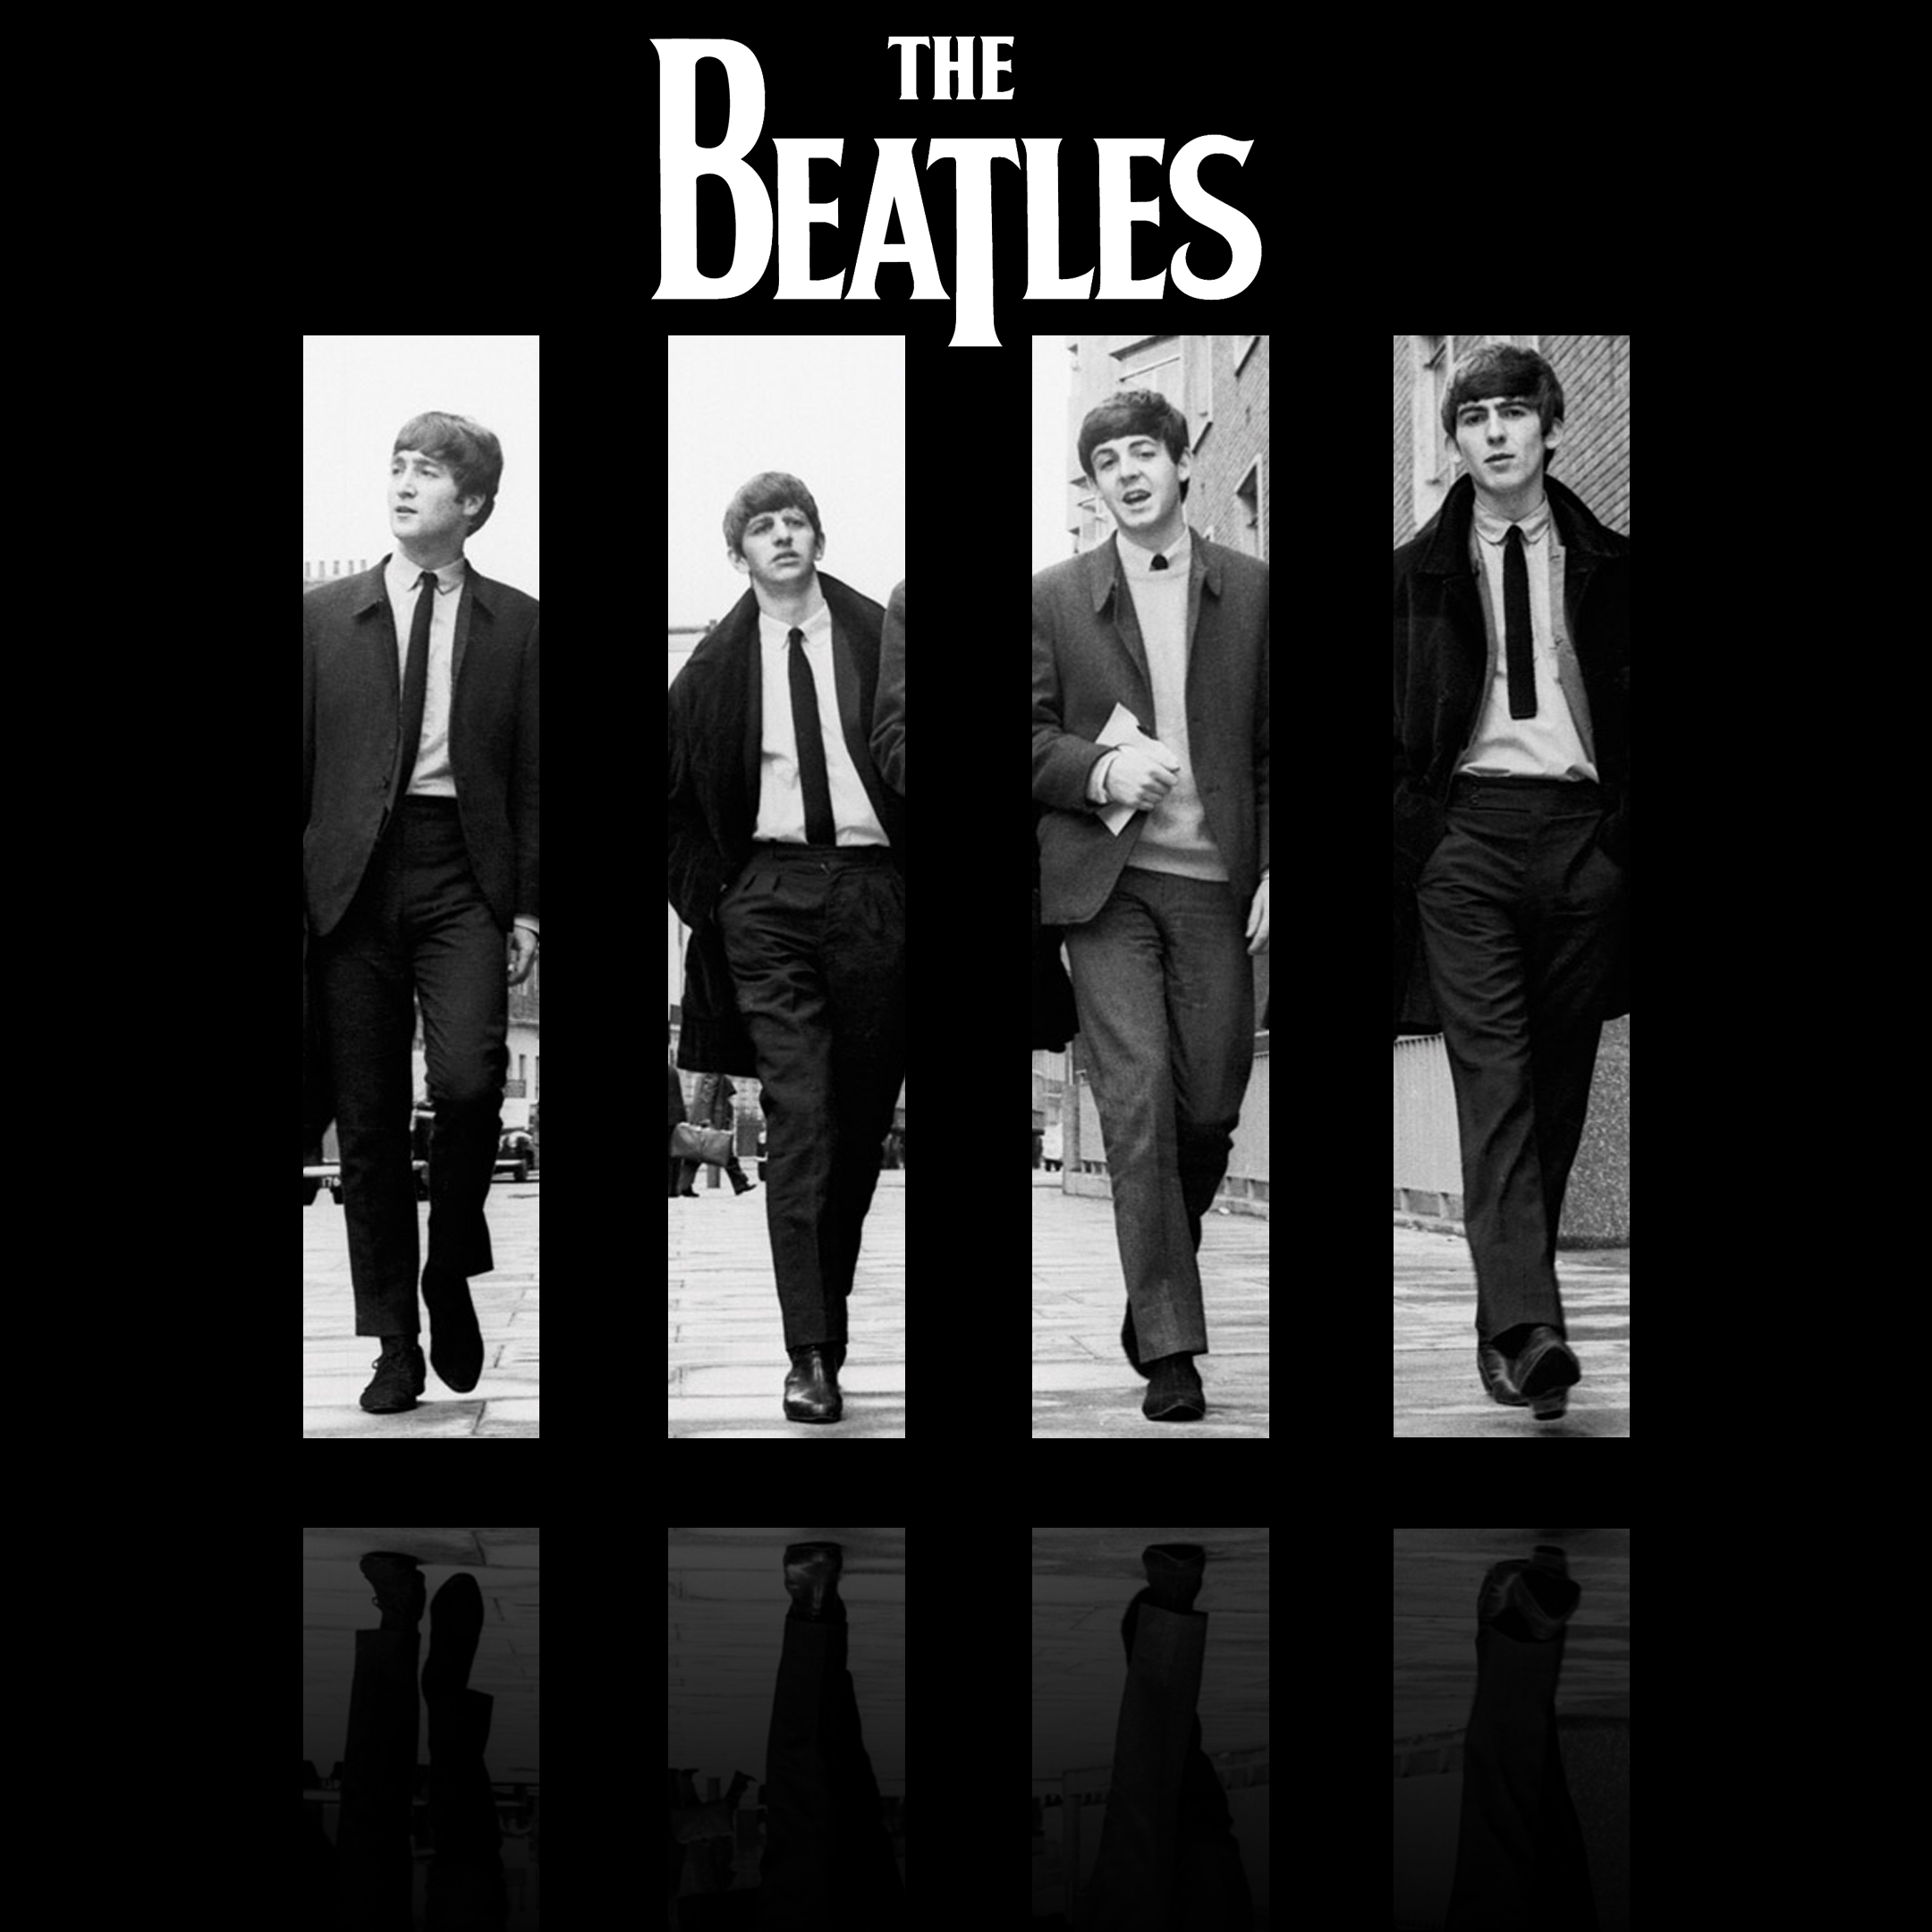 Download The Beatles Wallpaper For Windows #1lu6d » hdxwallpaperz.com